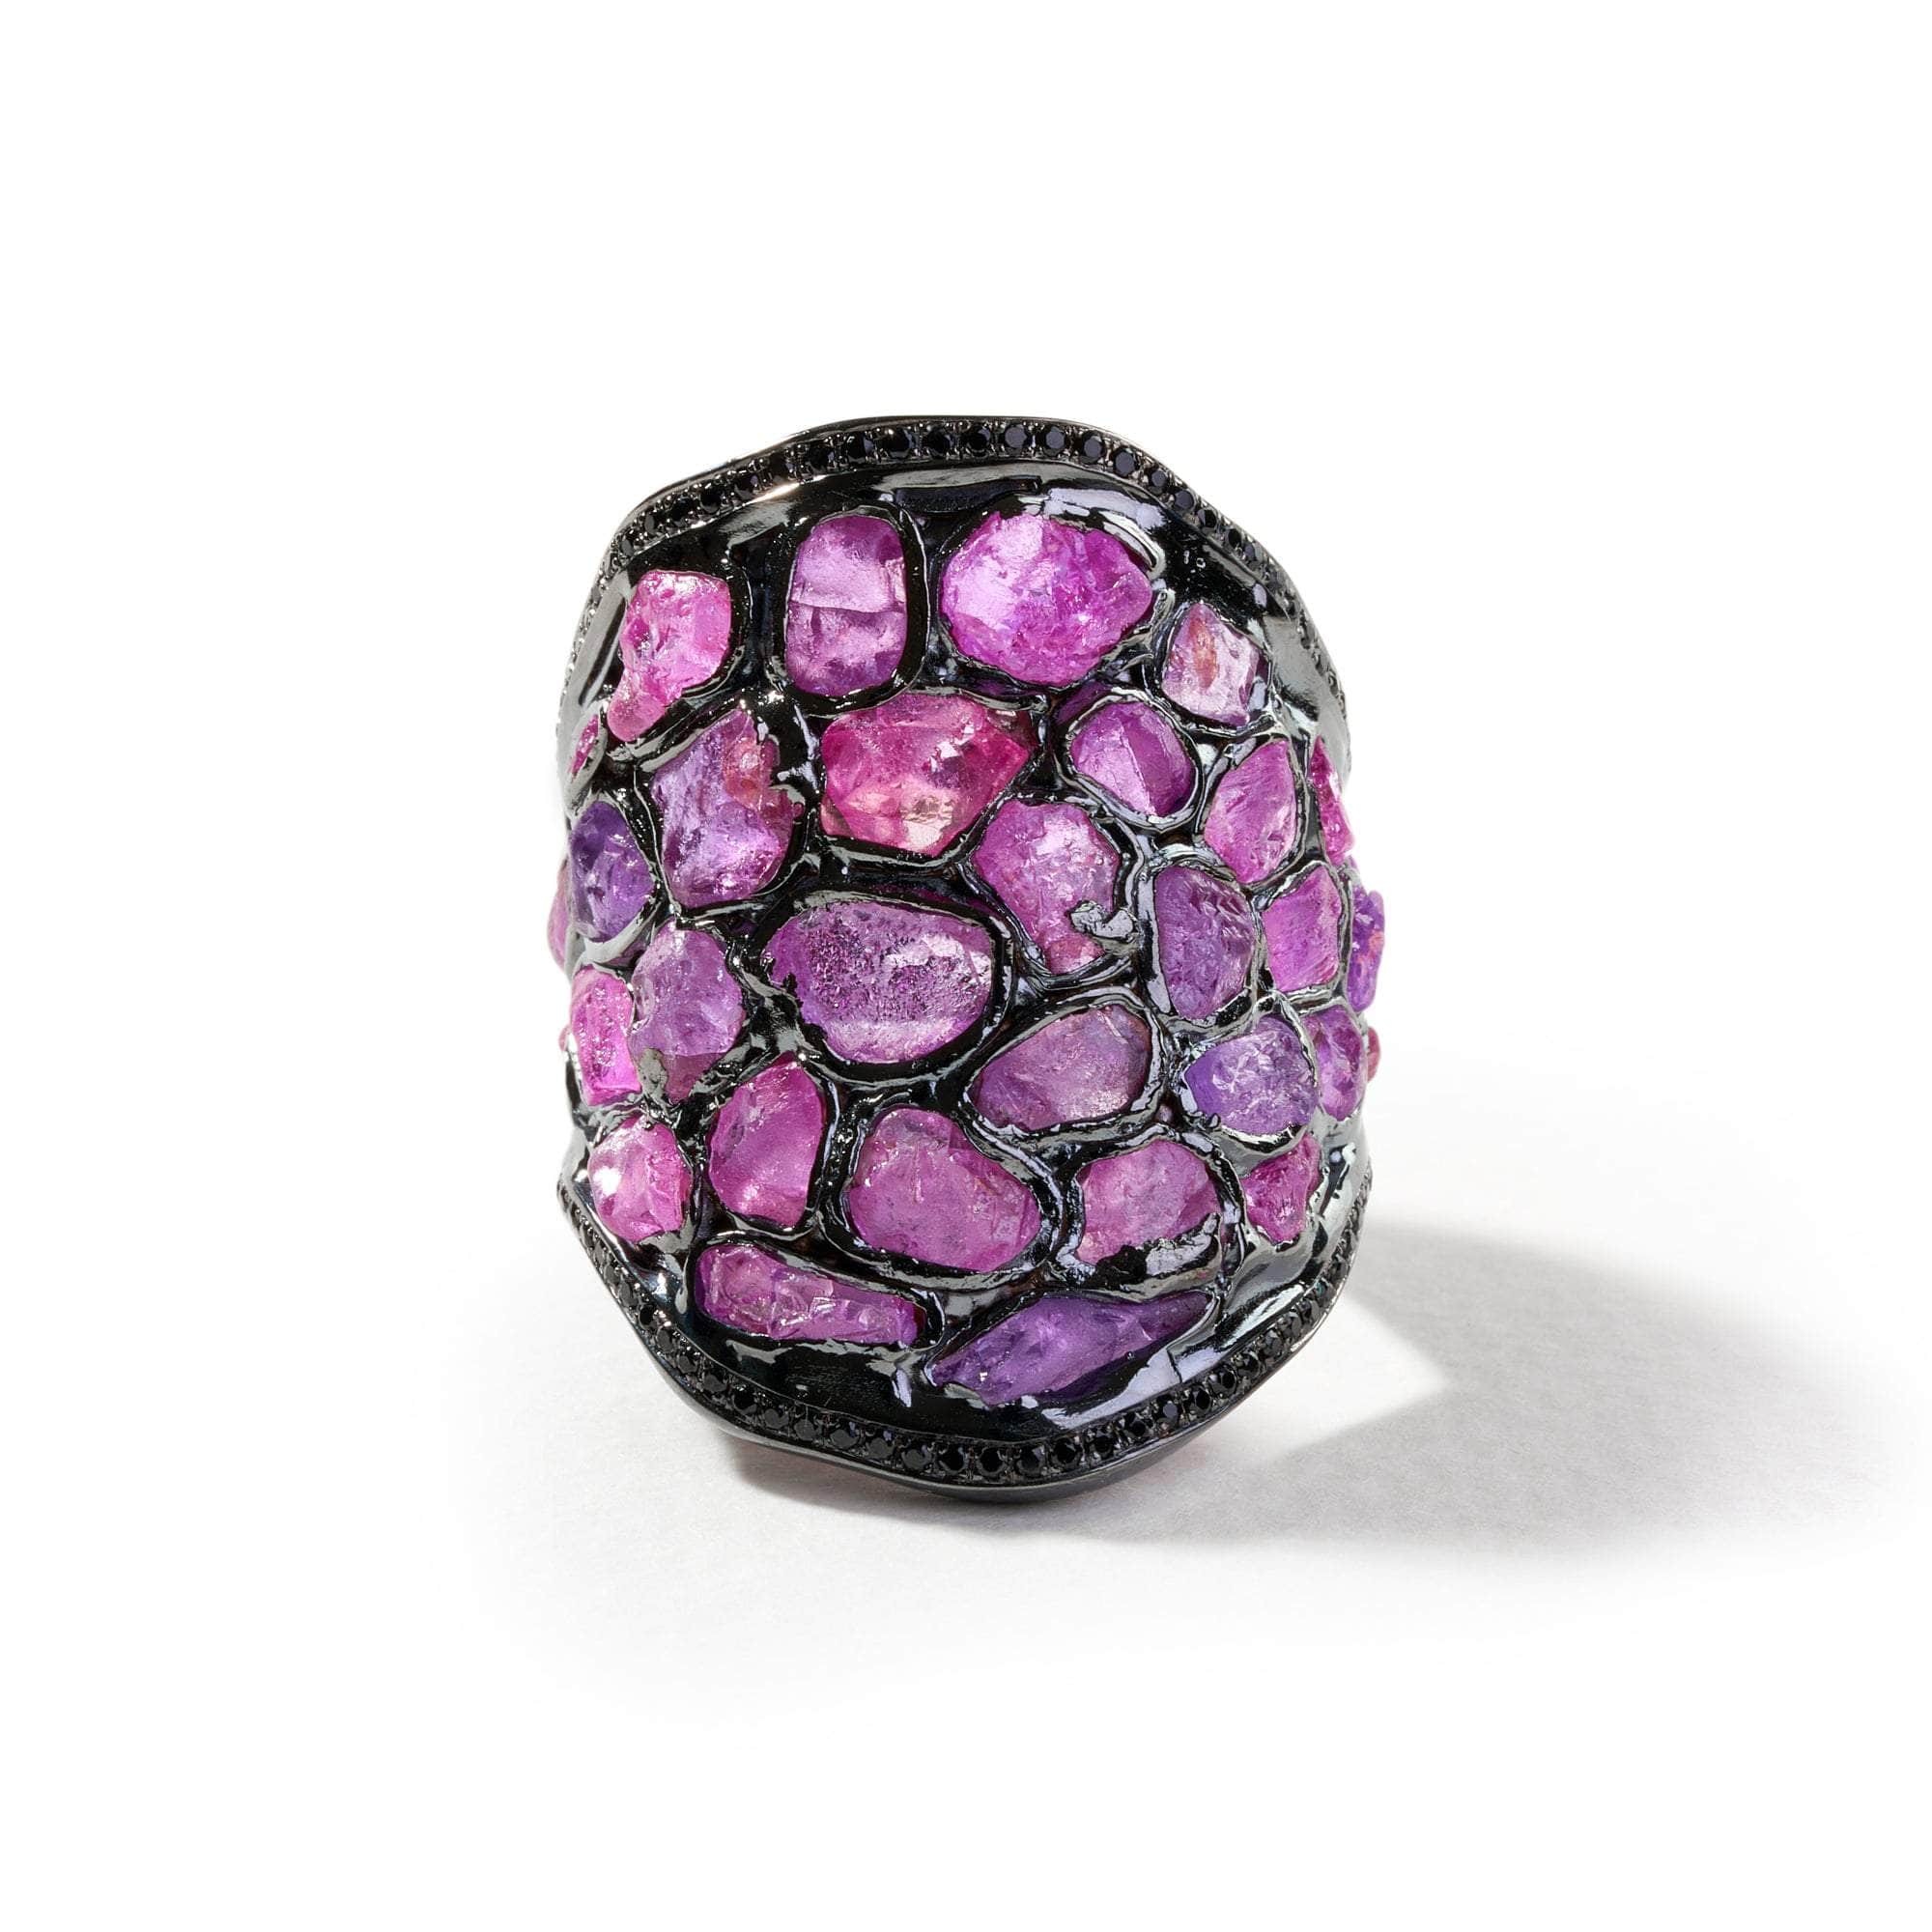 Cosm Rough Pink Sapphire and Black Spinel Ring GERMAN KABIRSKI